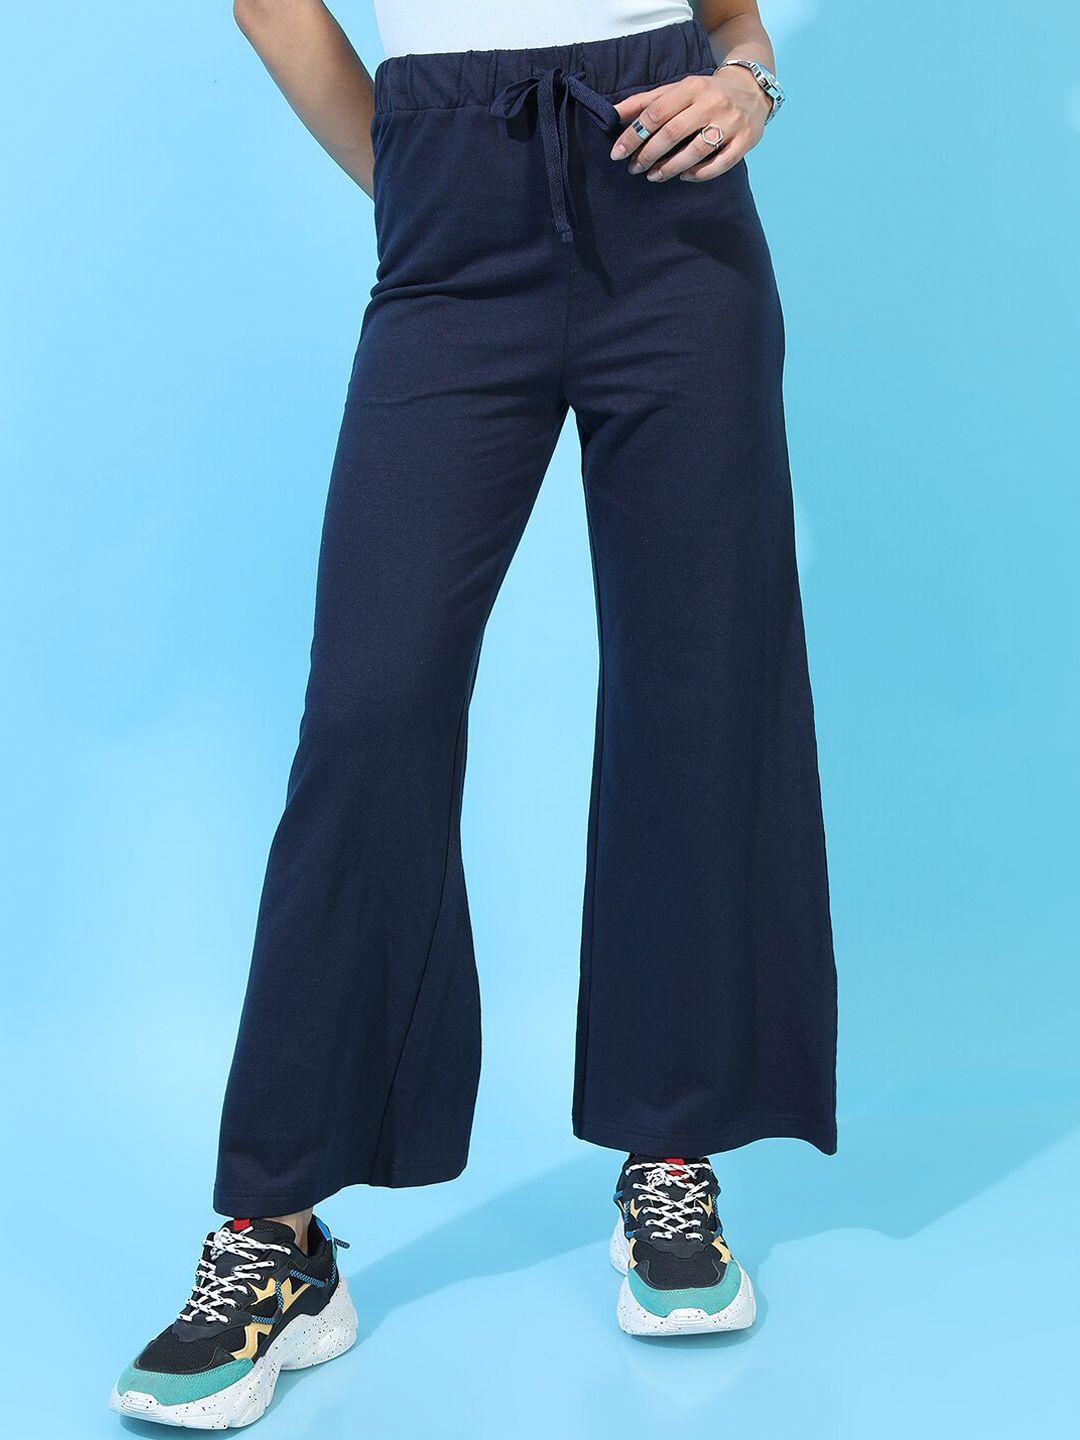 tokyo talkies women deep navy blue solid bootcut track pants